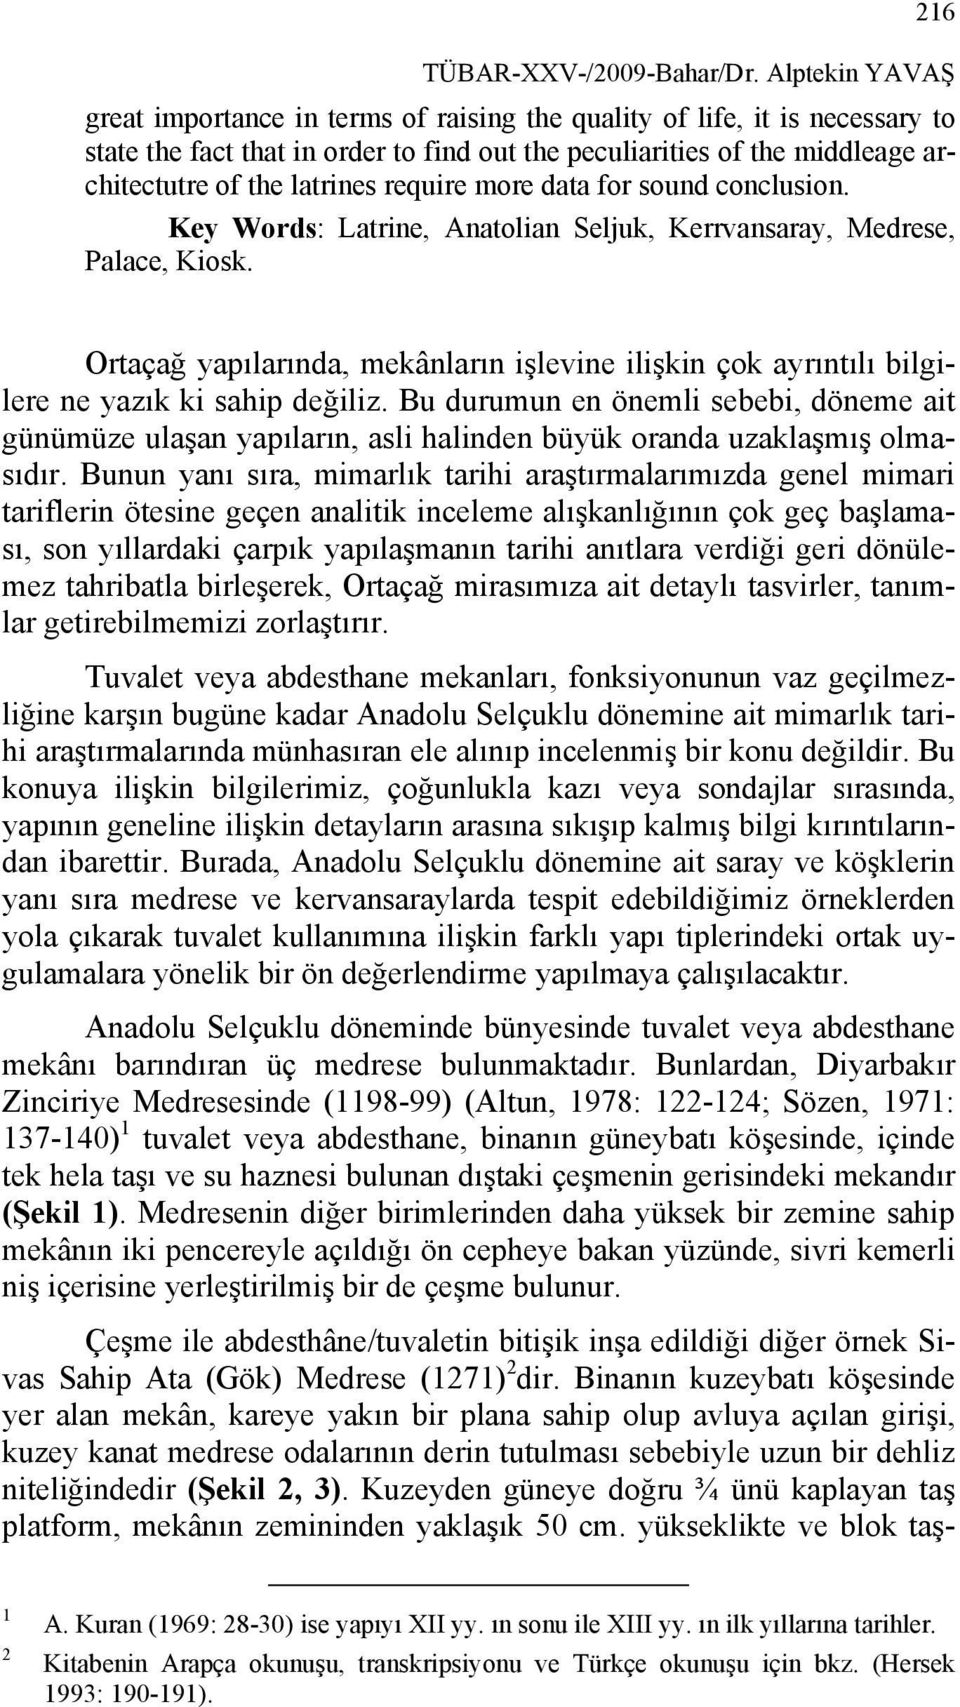 require more data for sound conclusion. Key Words: Latrine, Anatolian Seljuk, Kerrvansaray, Medrese, Palace, Kiosk.